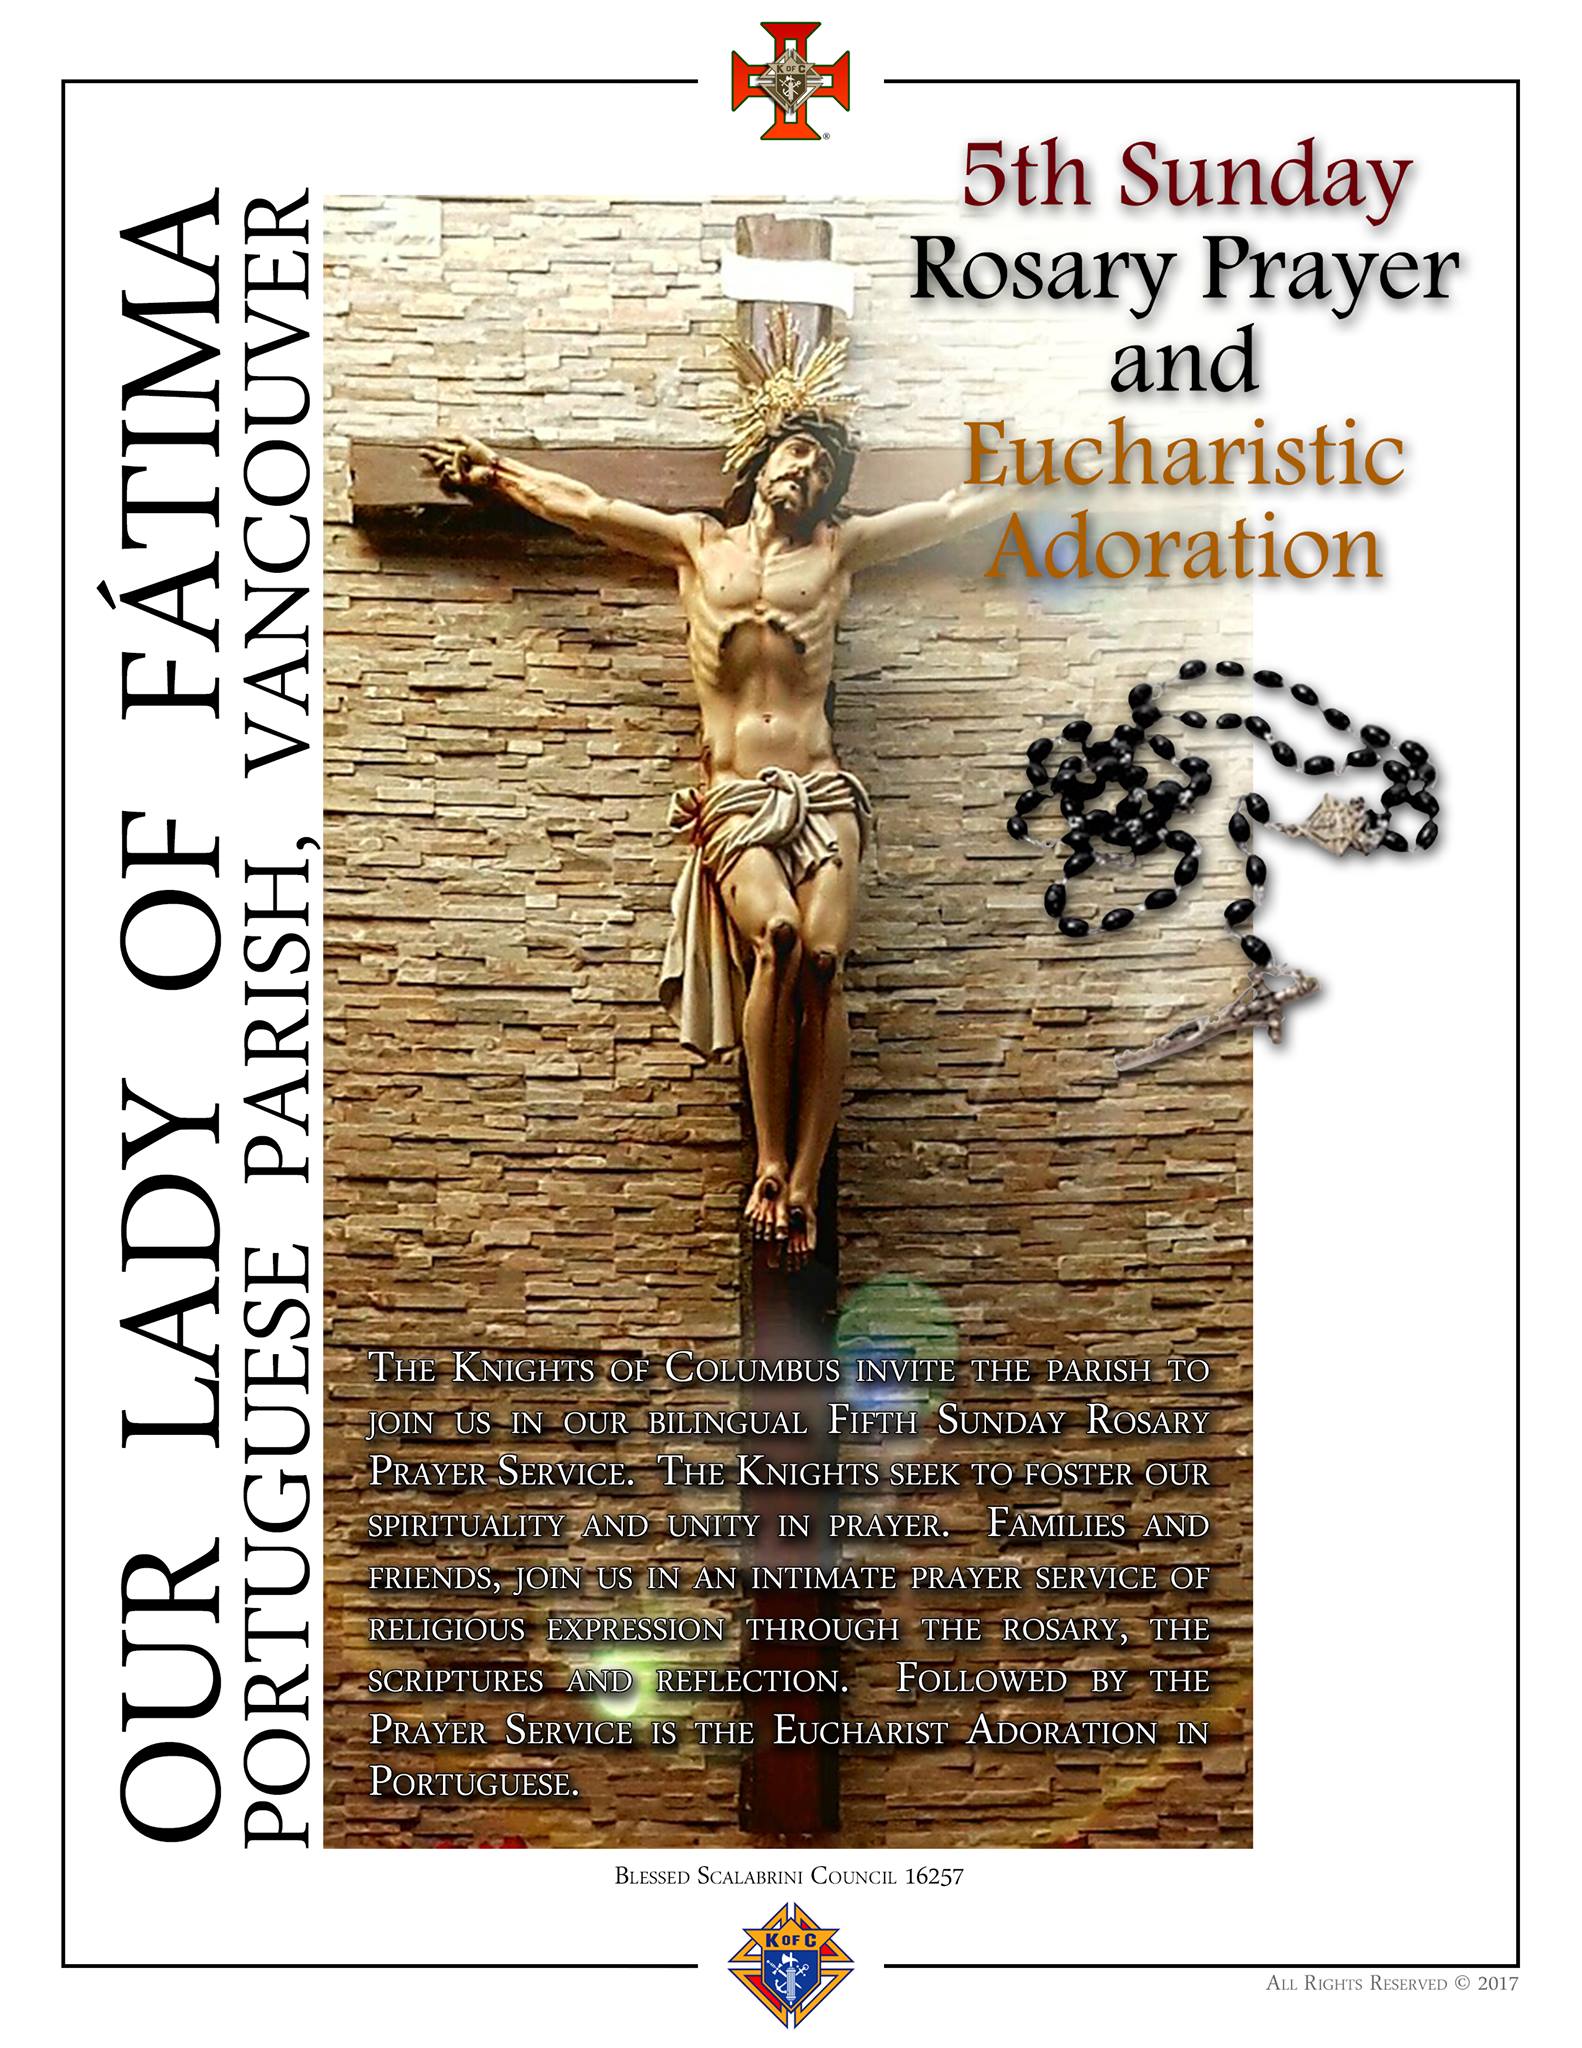 Fifth Sunday Rosary Prayer Service & Adoration of the Eucharist